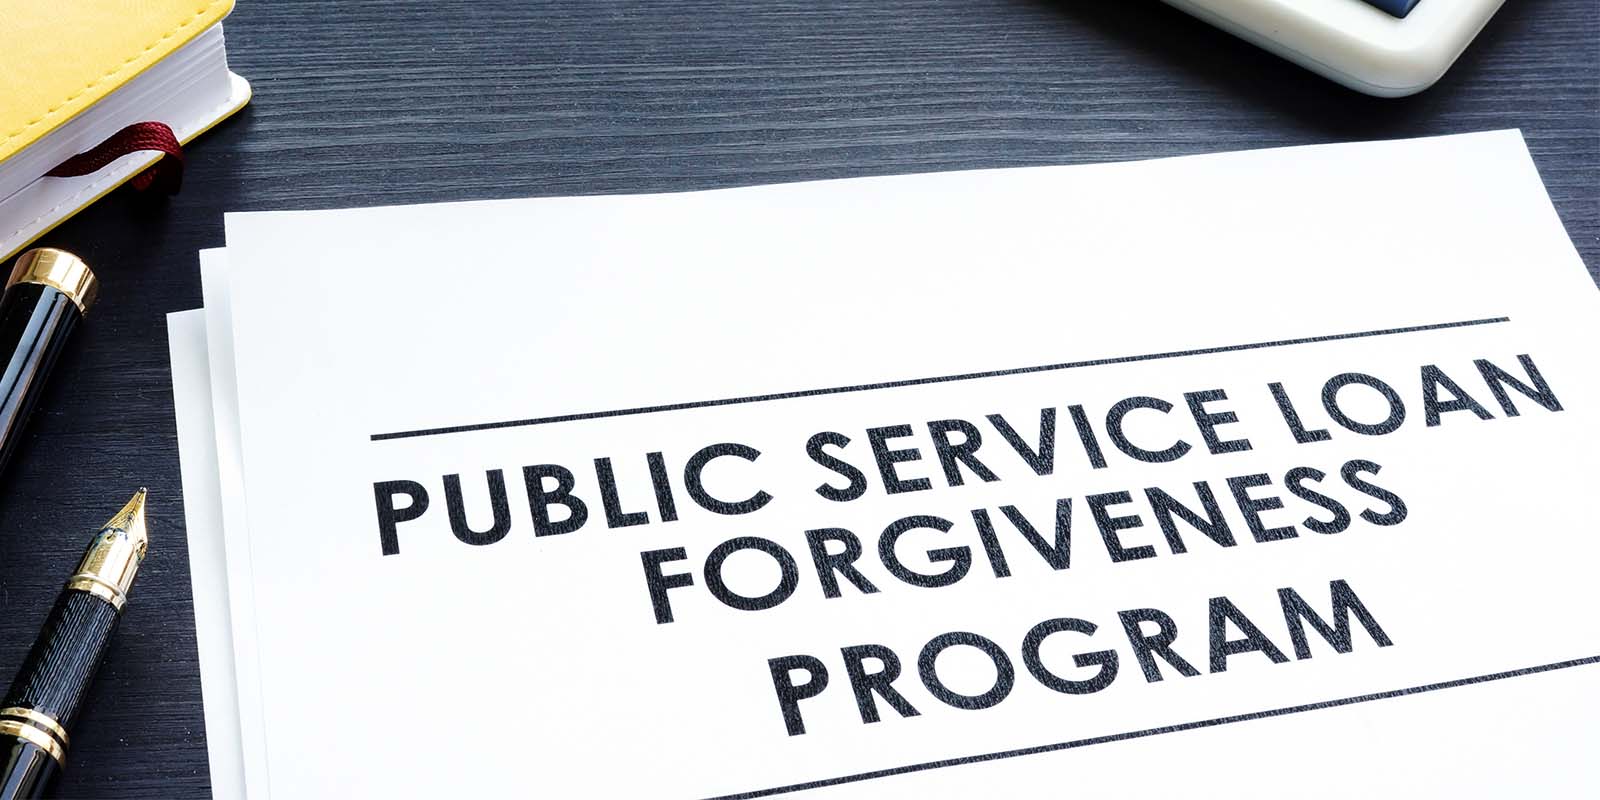 Major improvements to the Public Service Loan Forgiveness Program announced